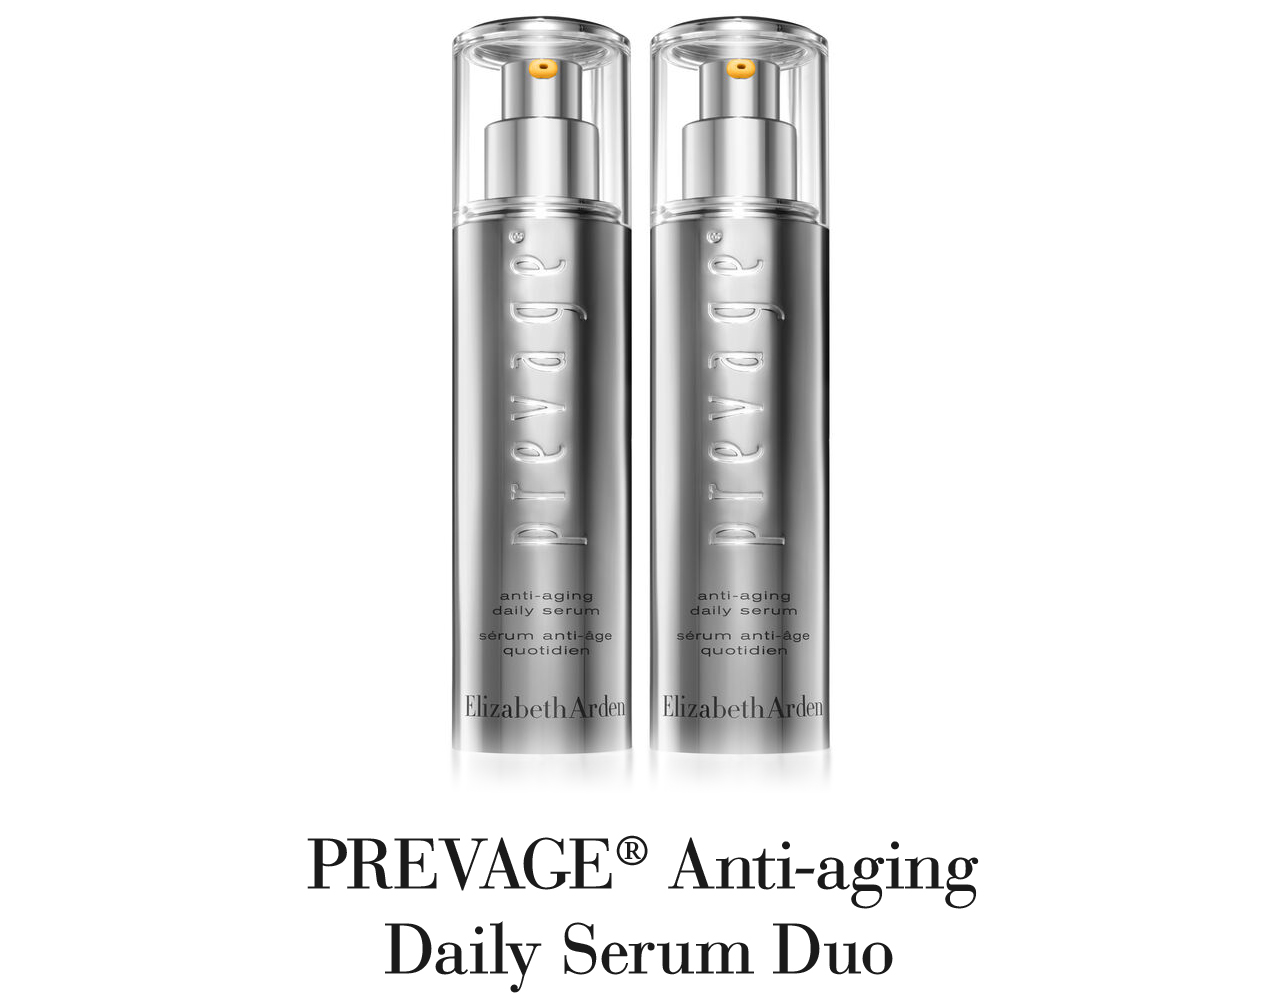 PREVAGE? Anti-aging Daily Serum Duo